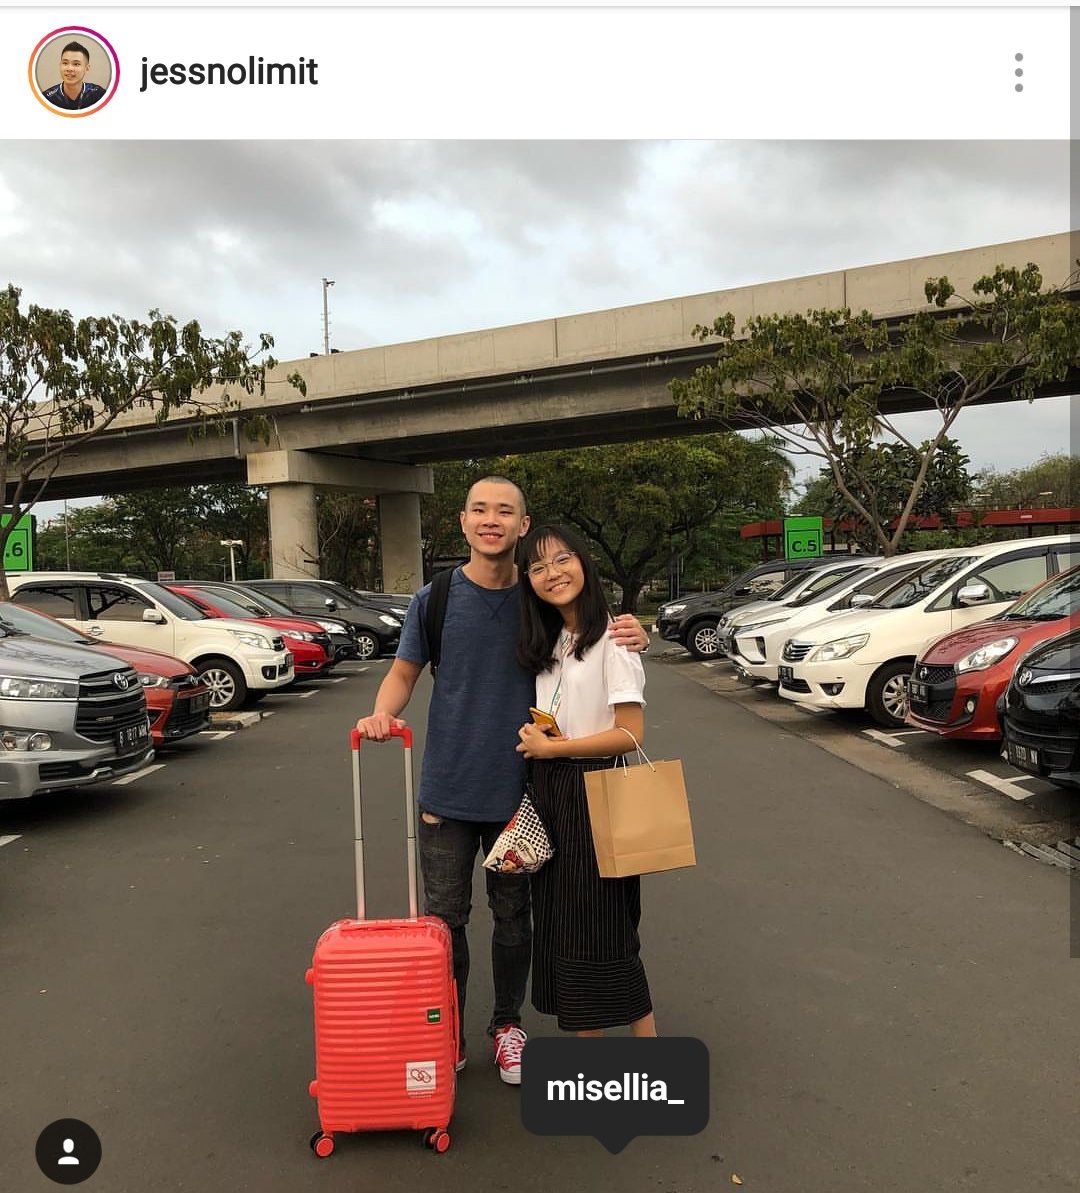 Foto pertama Jess No Limit dan Misellia yang diposting di Instagram Jess No Limit